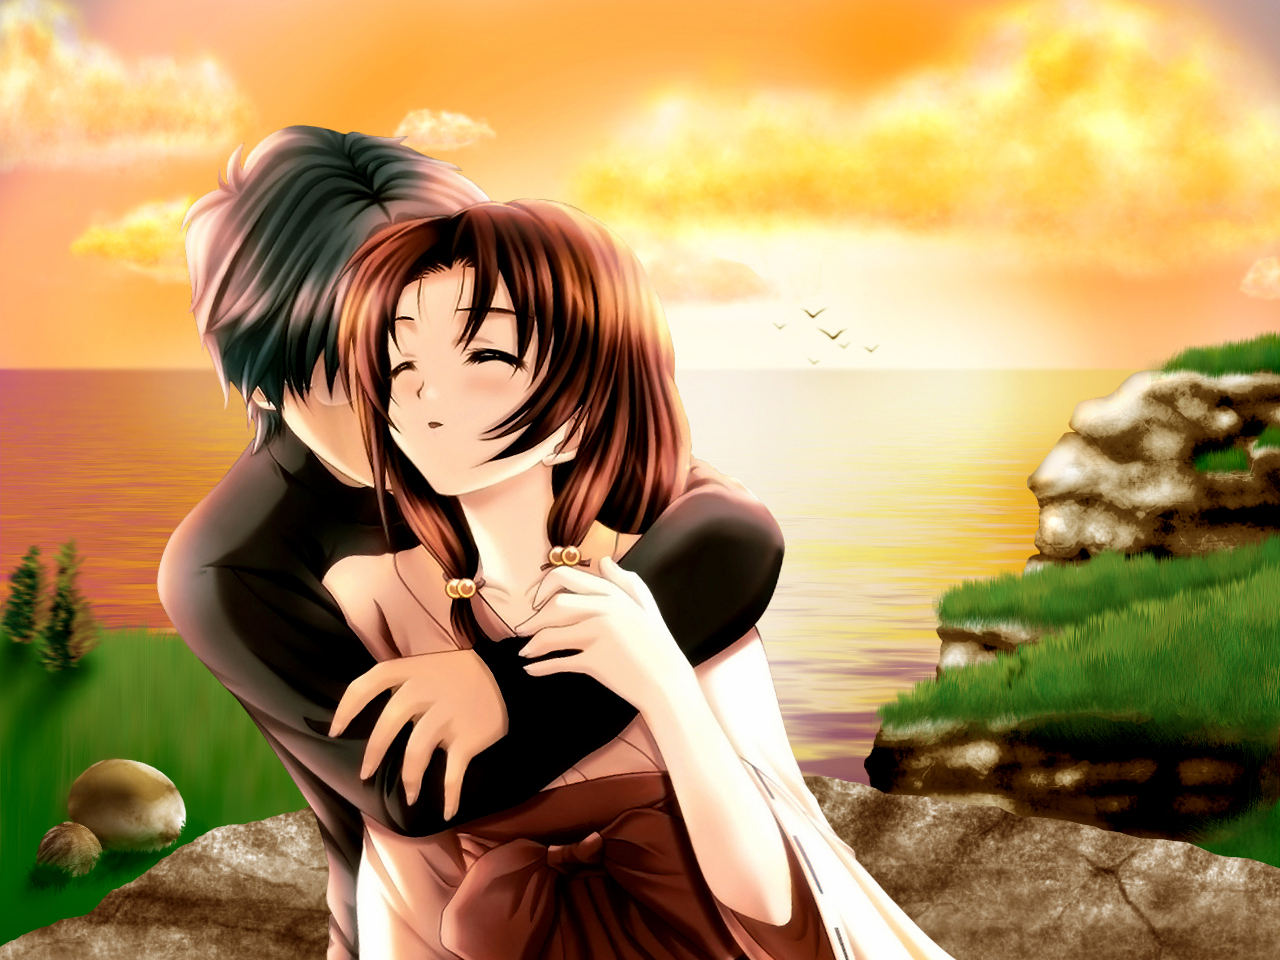  Romance HD Wallpaper   Anime Romantic Couples   Stylish HD Wallpapers